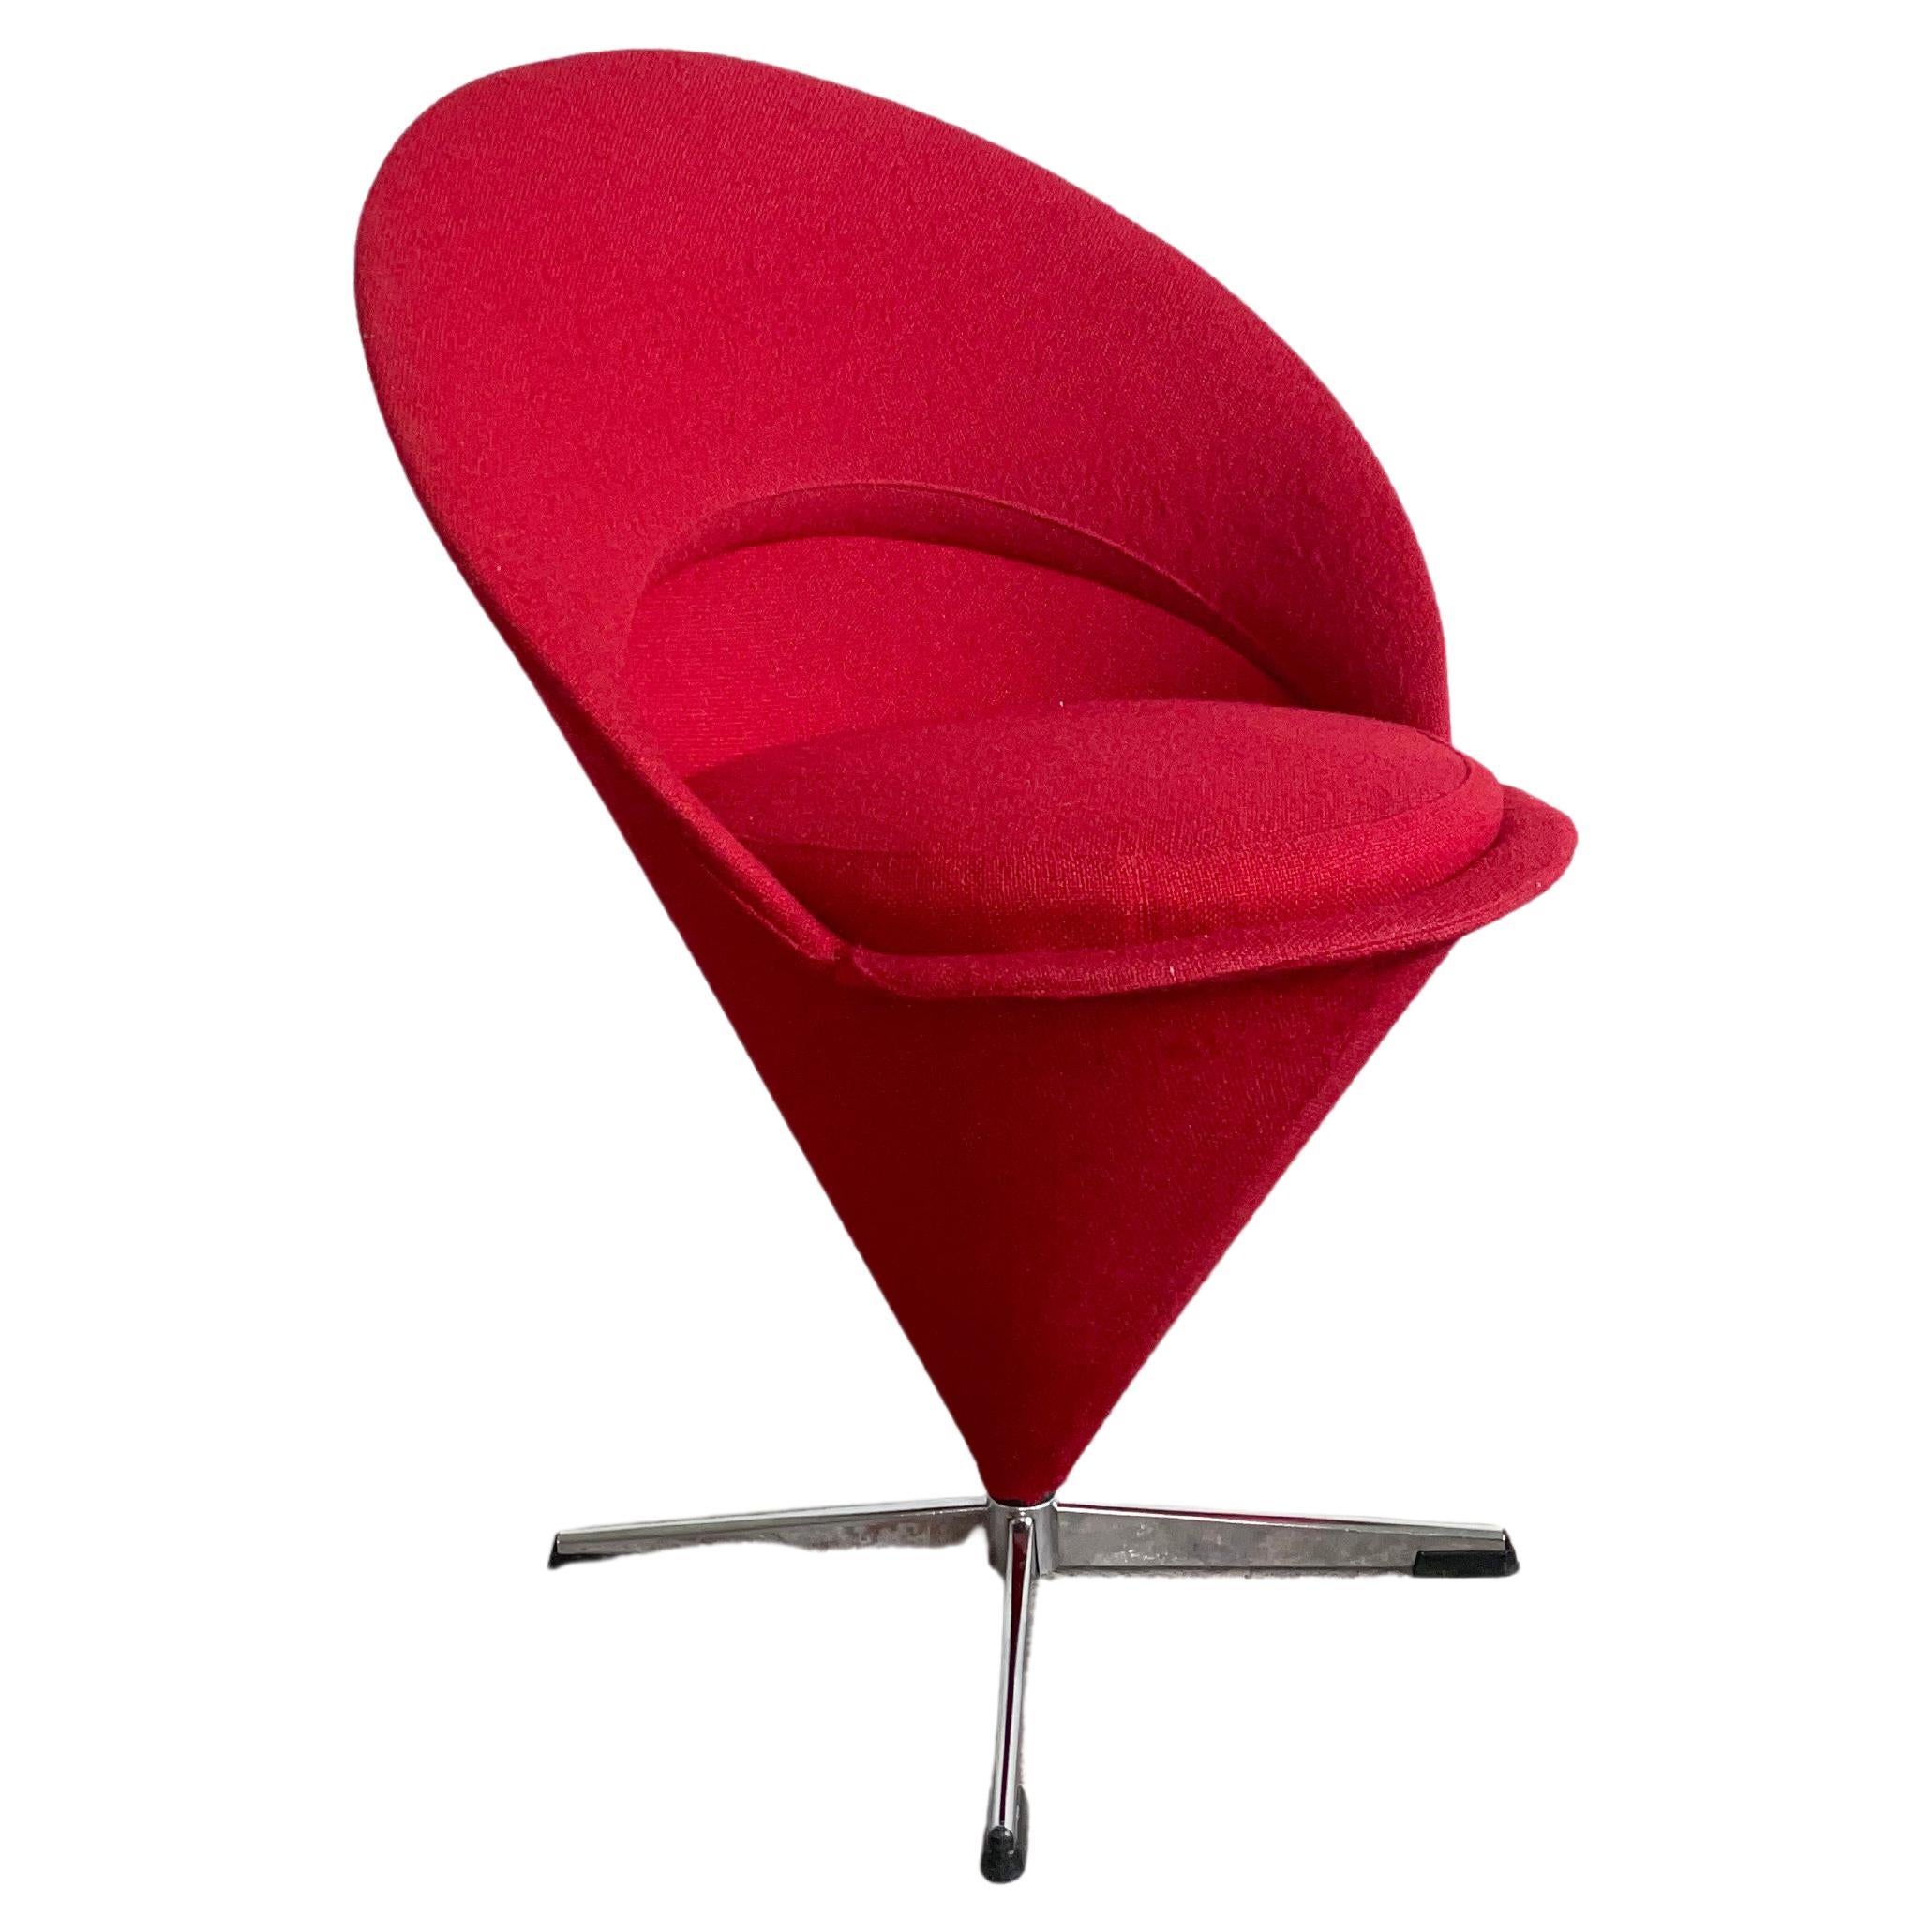 Verner Panton "Cone" Chair, Danish Design, 1960s-1970s